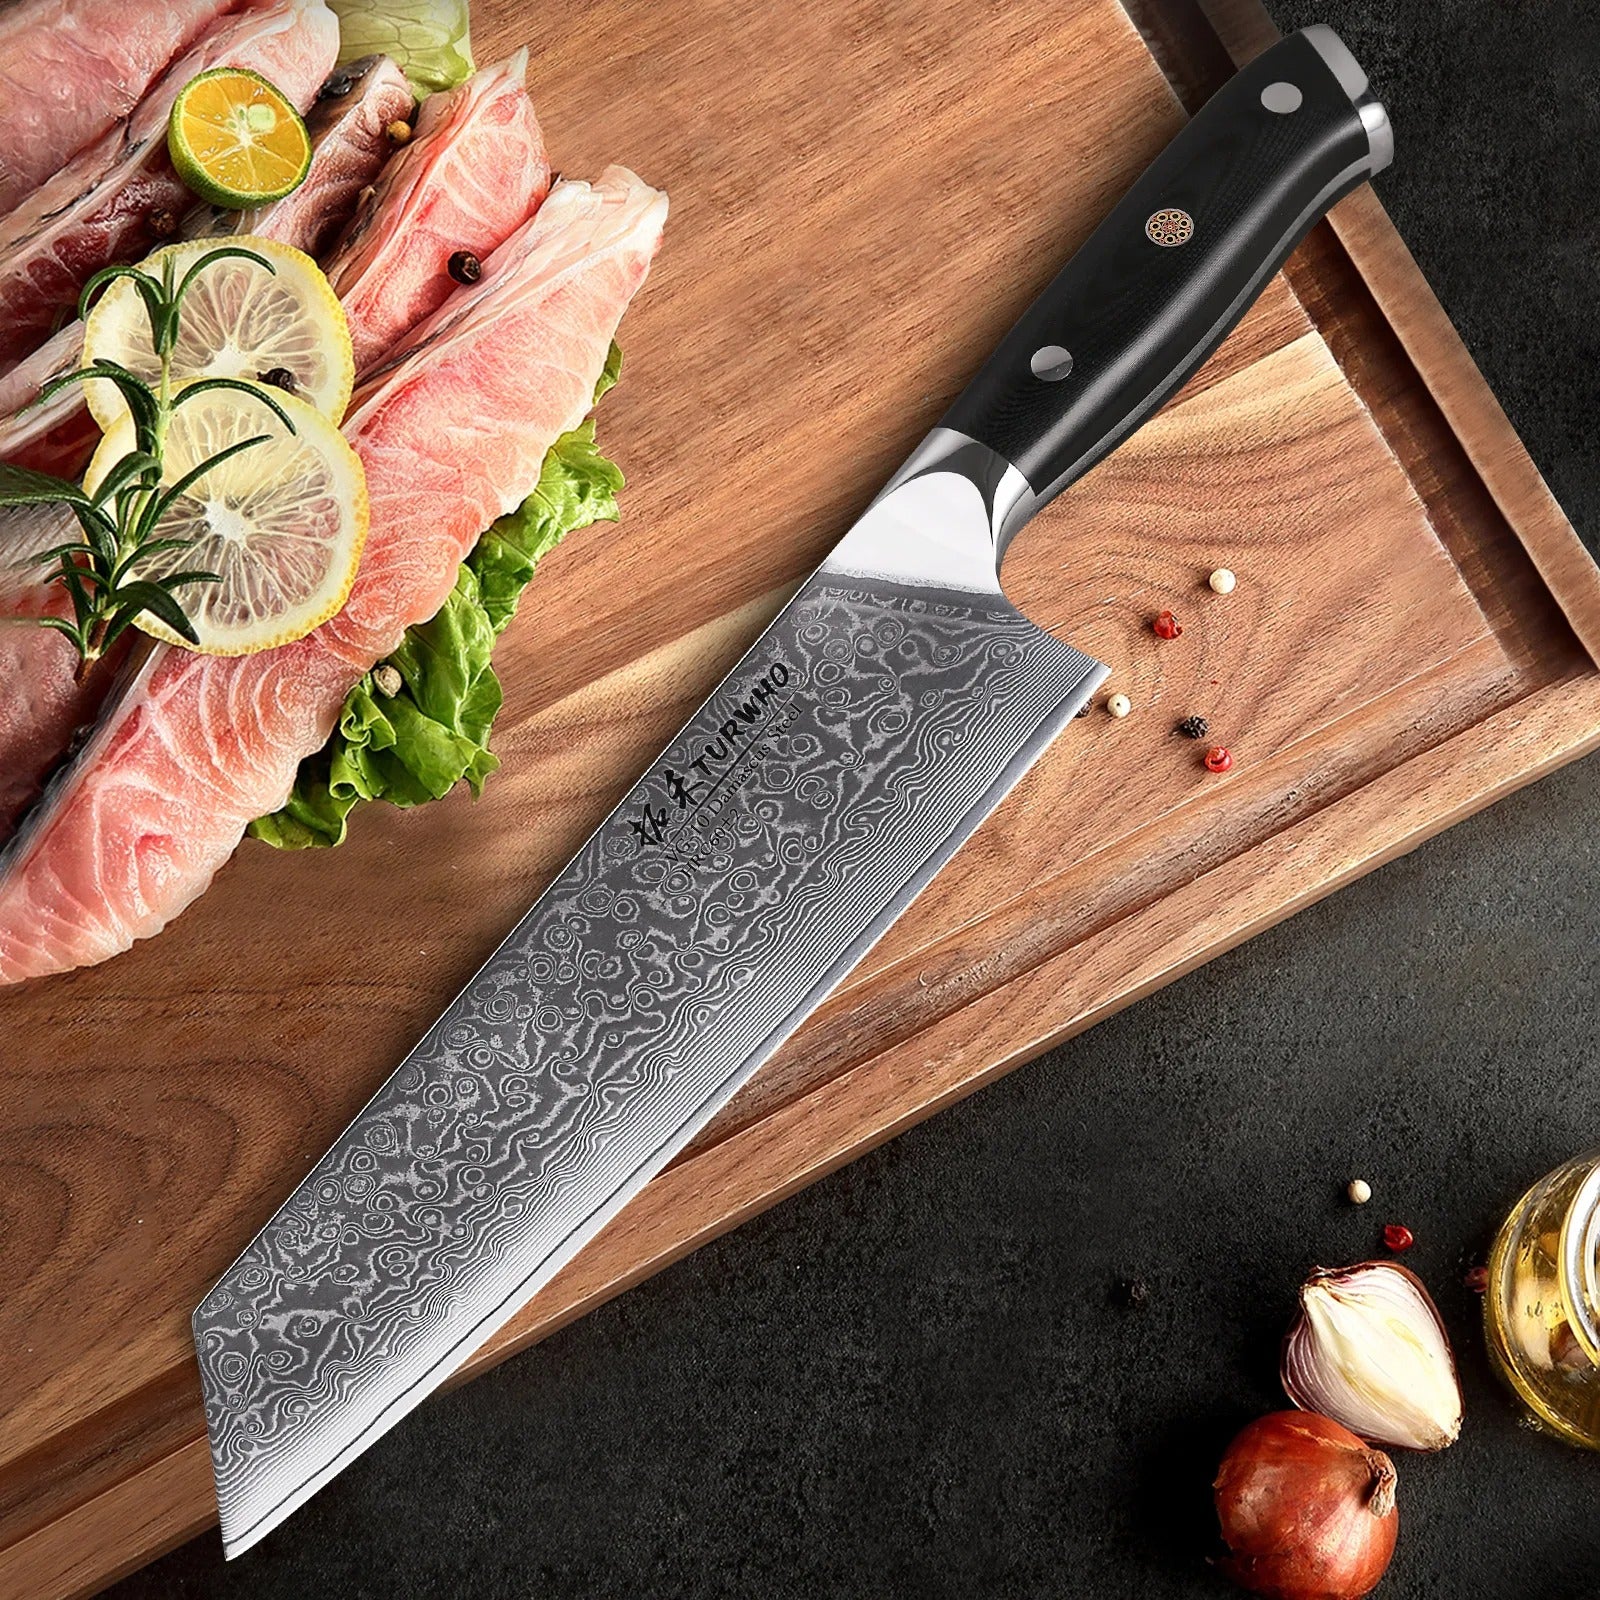 KD 8.5 Inch Japanese Kiritsuke Knife 67 Layers Damascus Steel Kitchen Knives